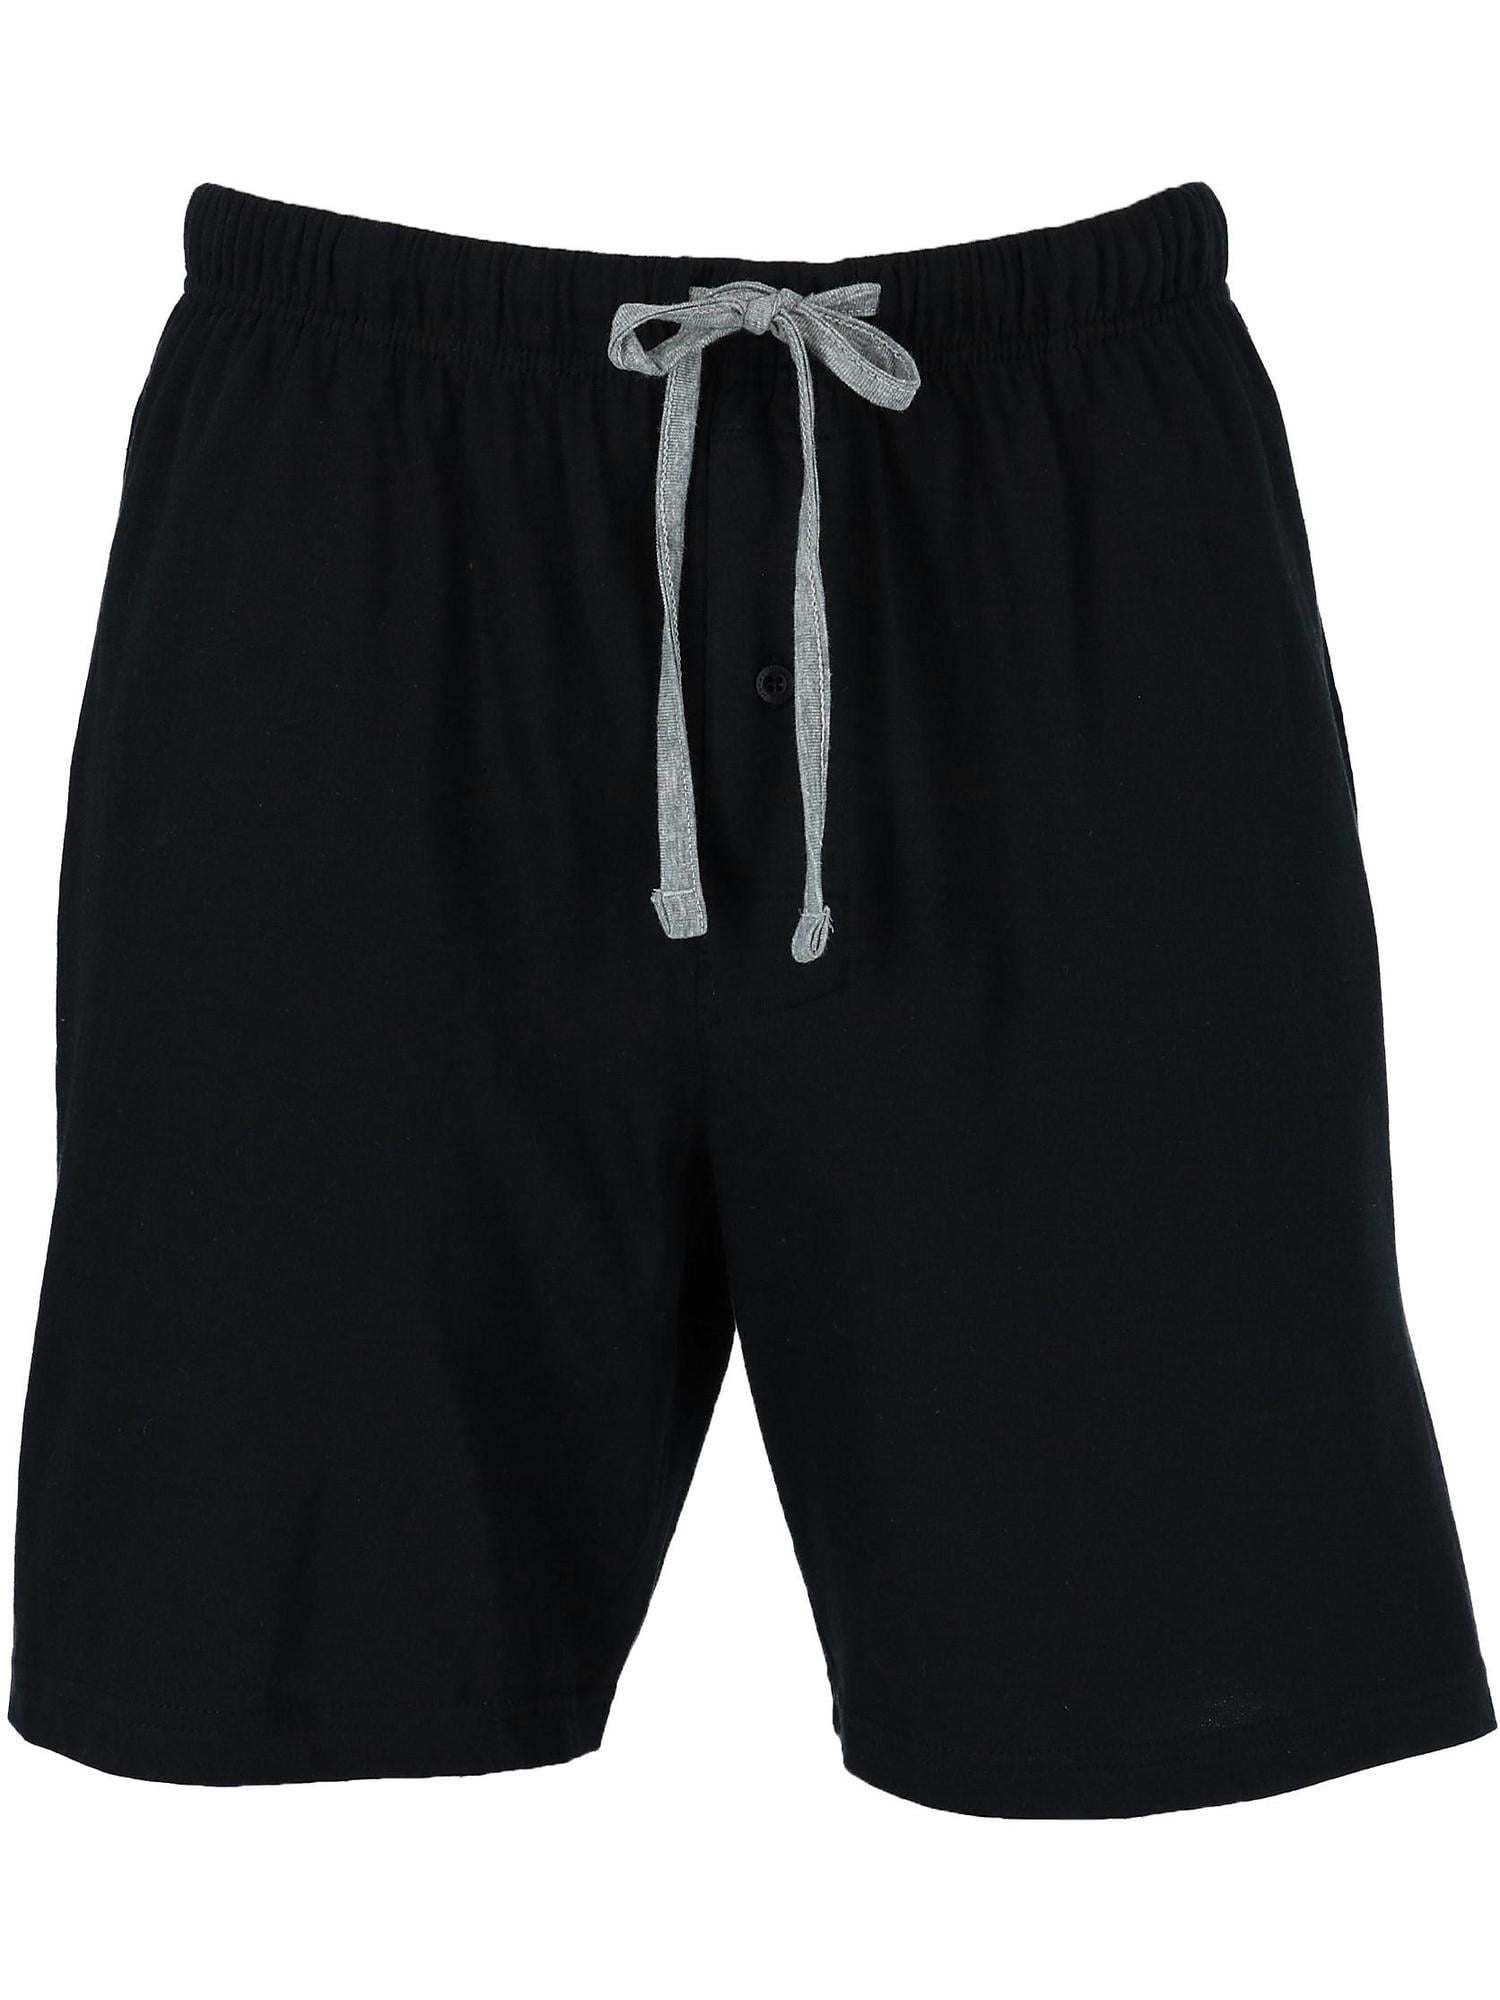 Hanes Jersey Knit Cotton Button Fly Pajama Sleep Shorts (Men) - Walmart.com